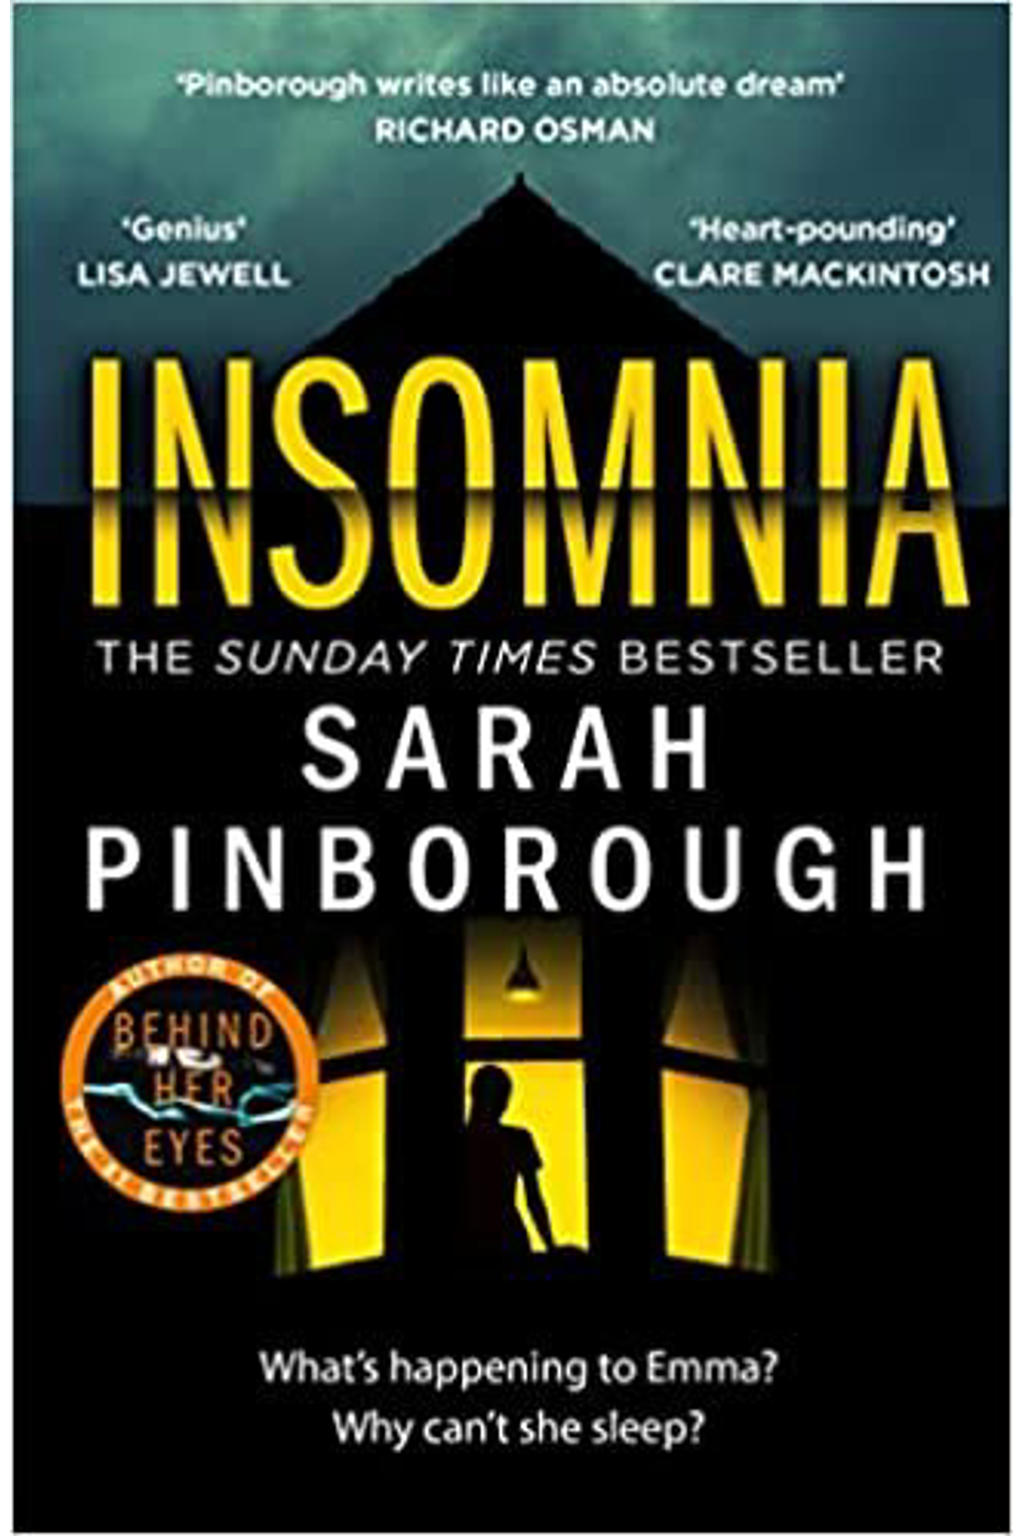 Insomnia - Pinborough, Sarah